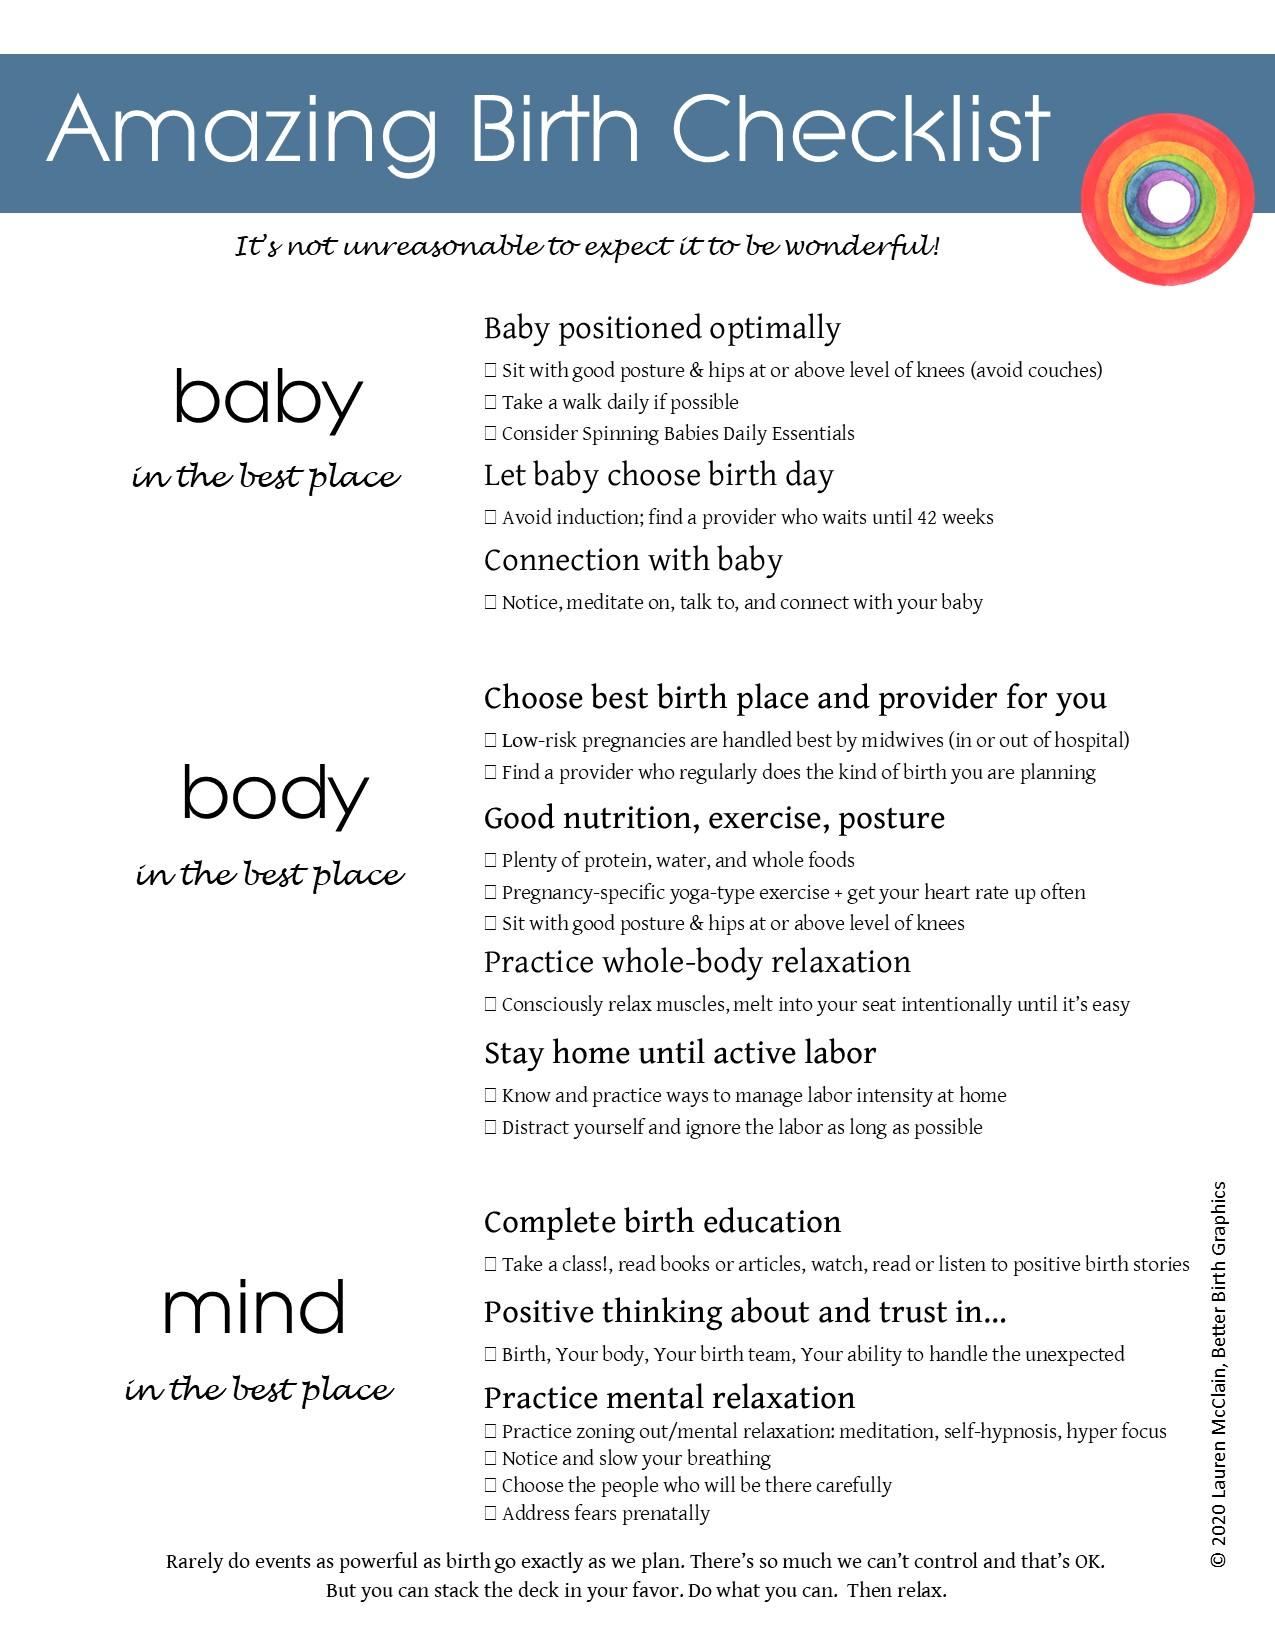 How to Prepare for Labor: The Complete Preparing for Childbirth Checklist